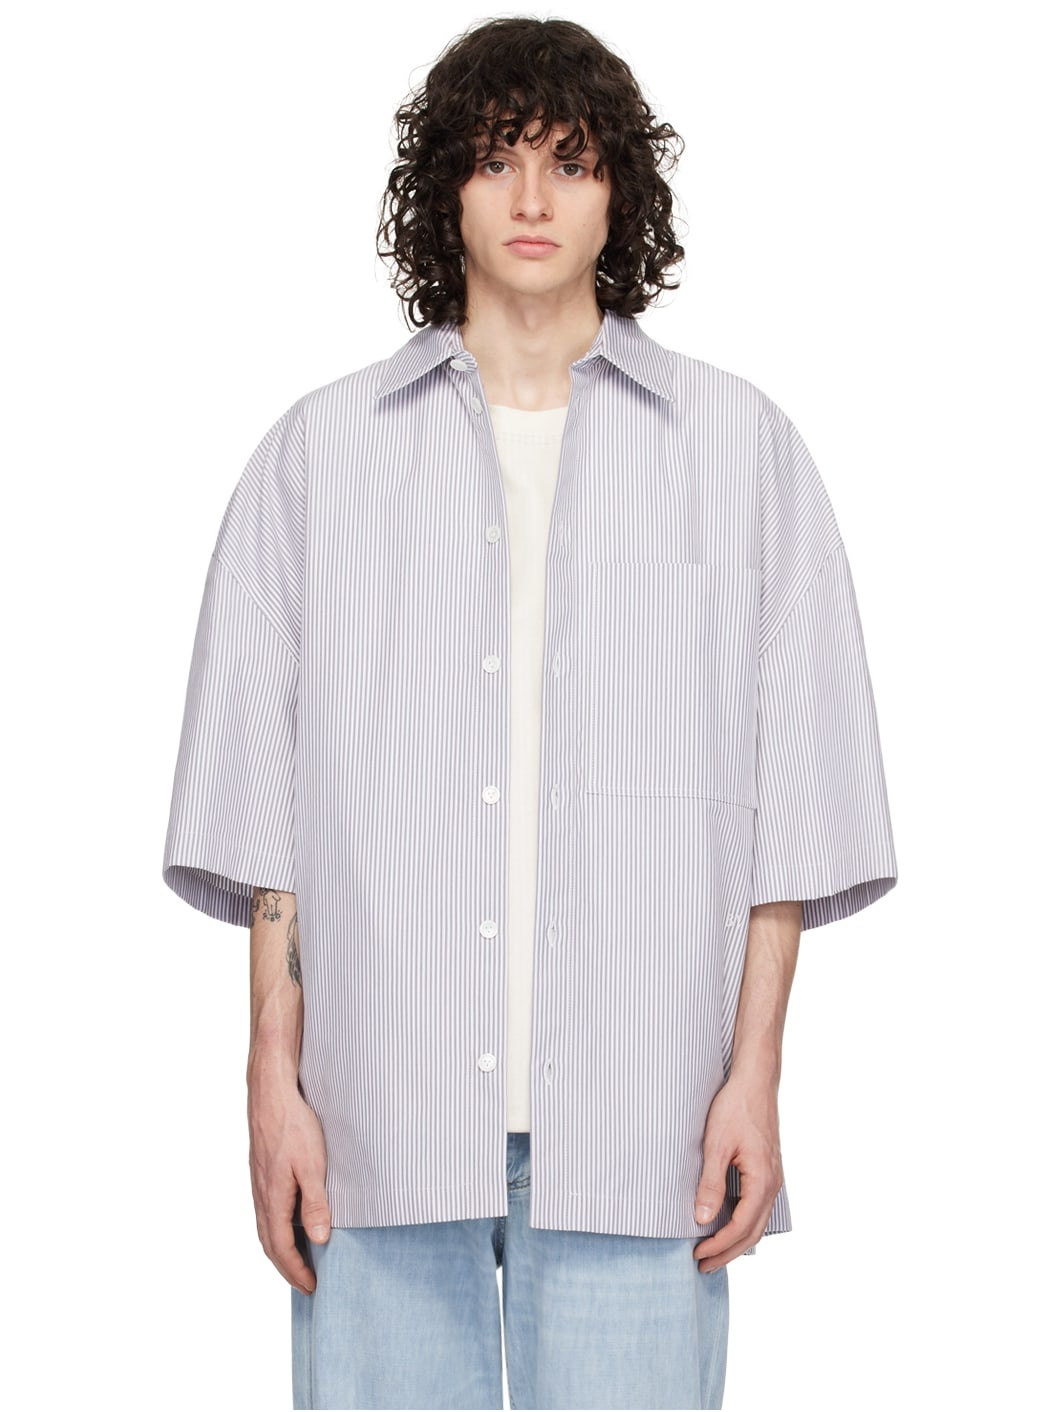 Gray & White Striped Shirt - 1